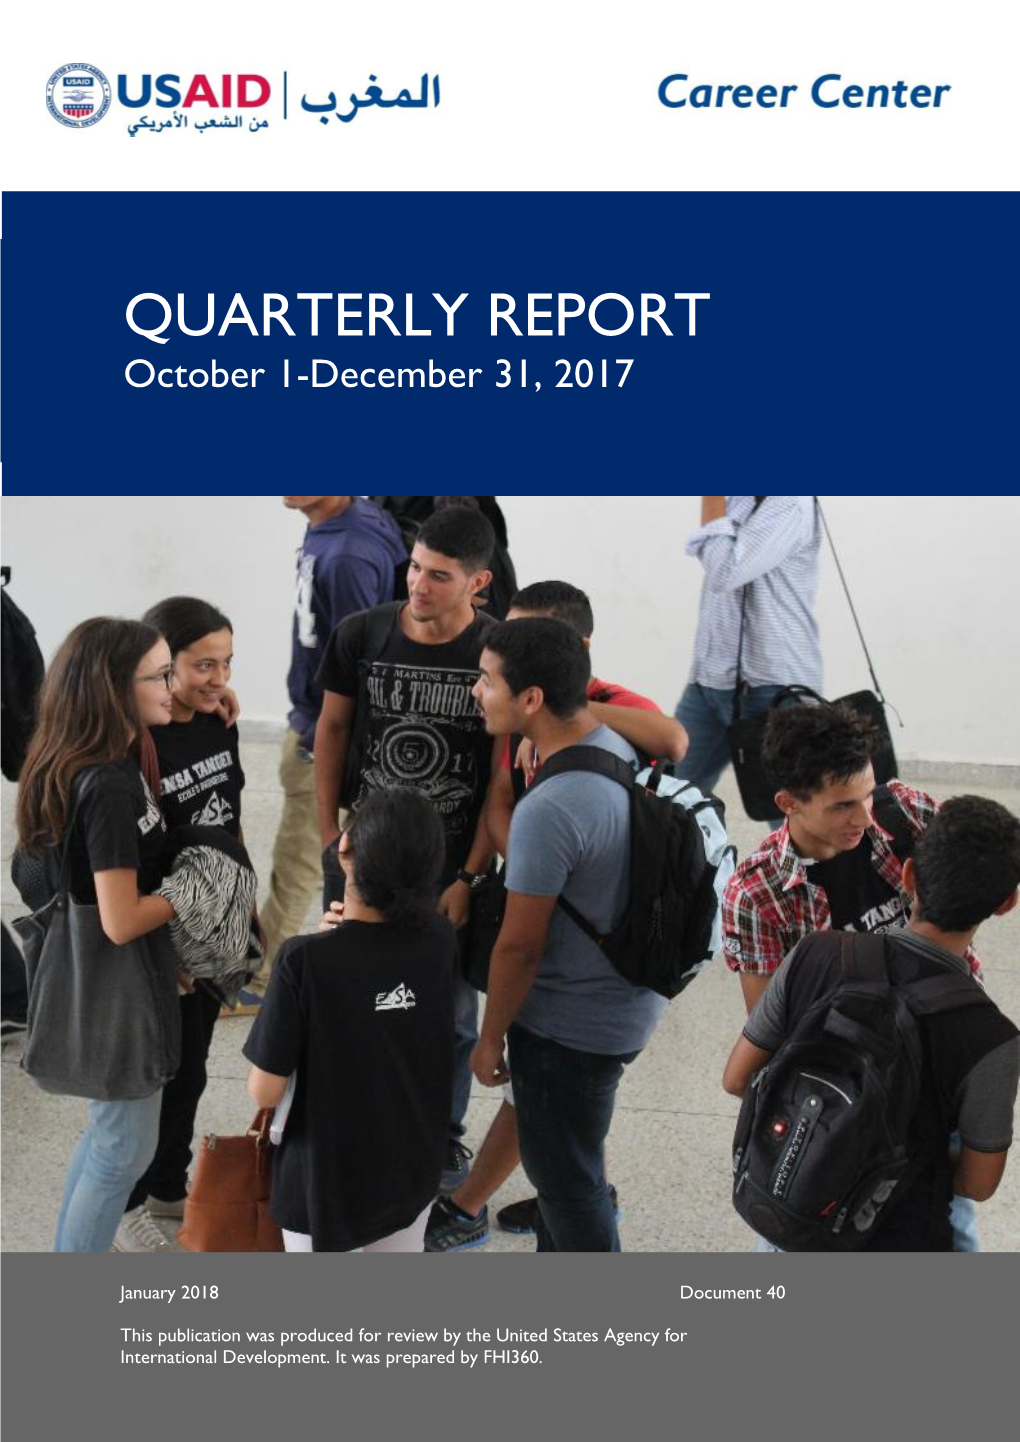 QUARTERLY REPORT October 1-December 31, 2017